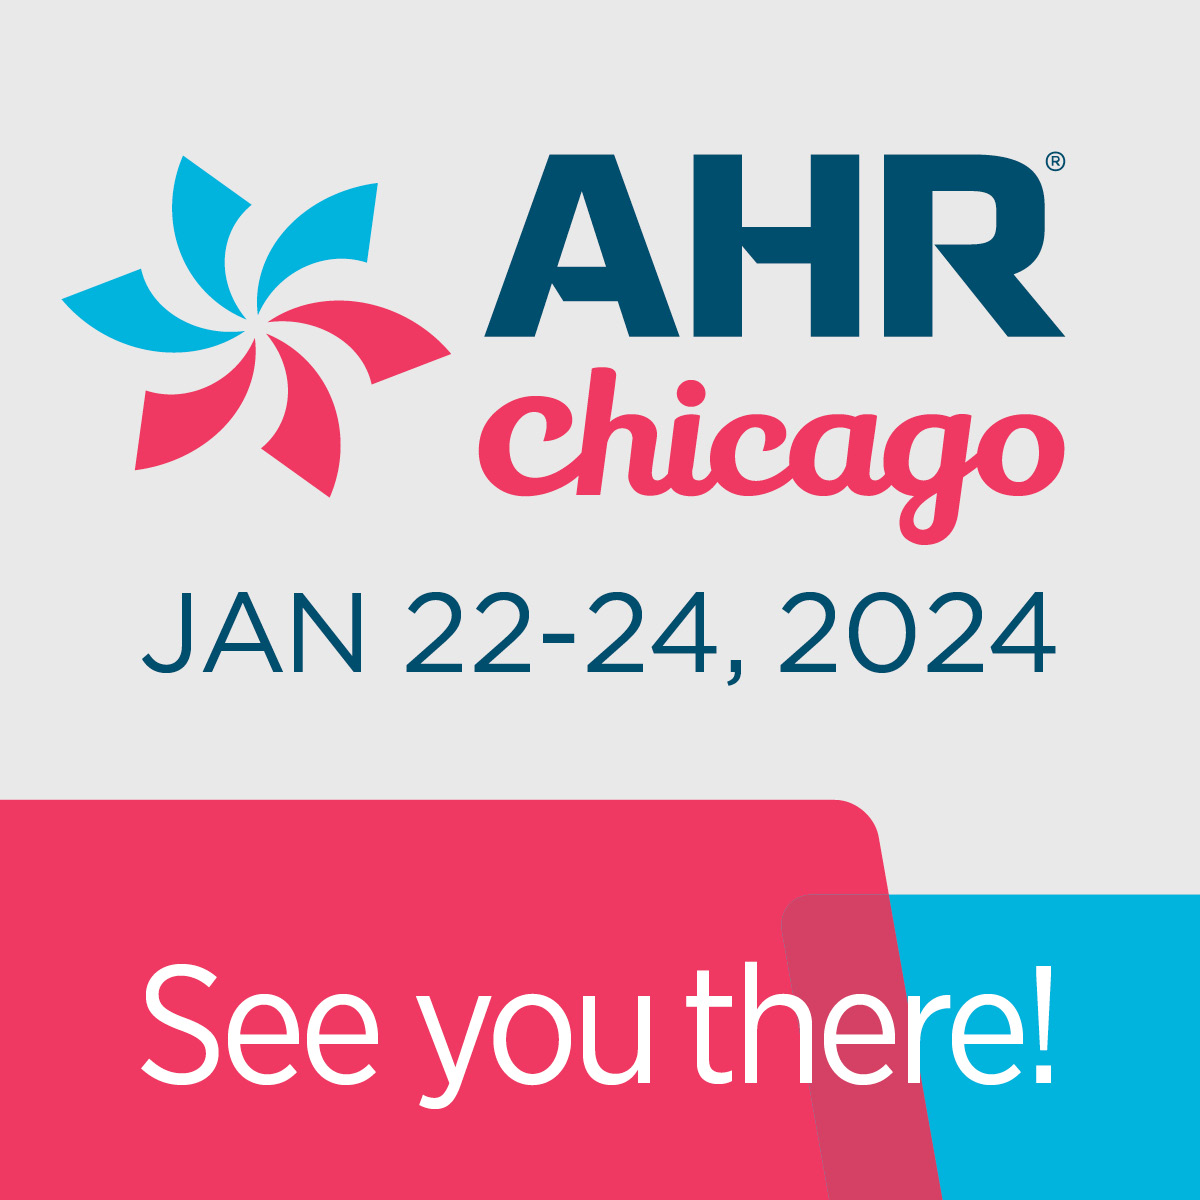 هيا شيكاغو!22-24 يناير 2024 معرض AHR